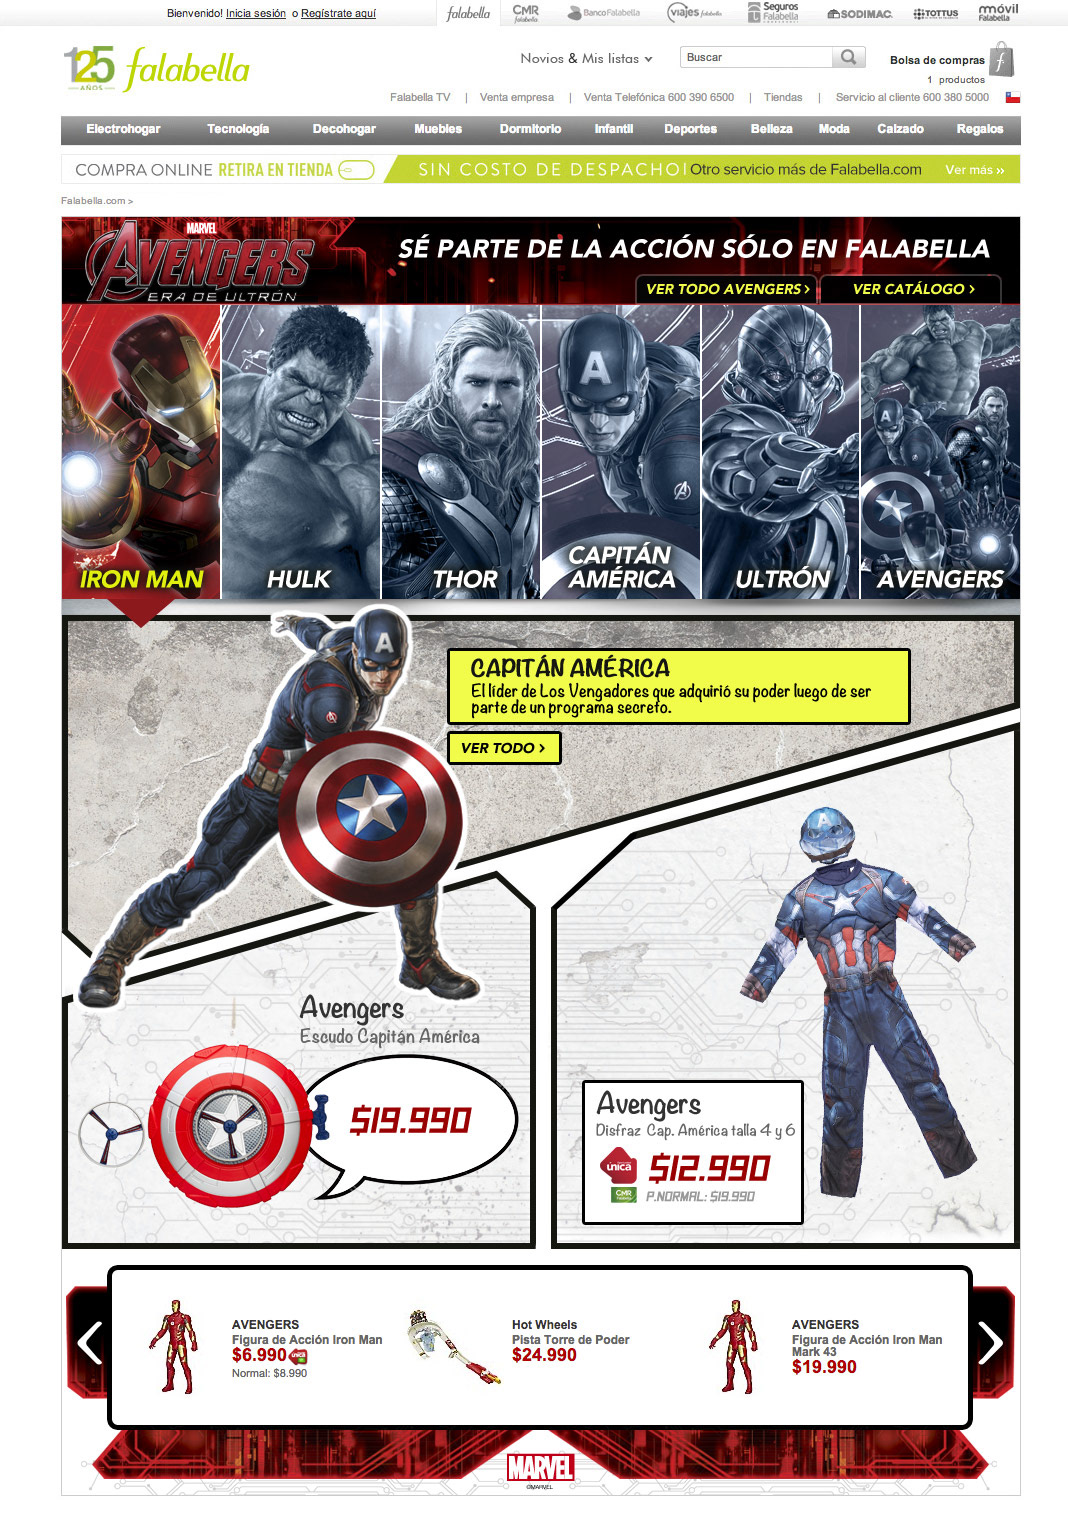 Avengers toys landingpage avengersmovie Retail Ecommerce